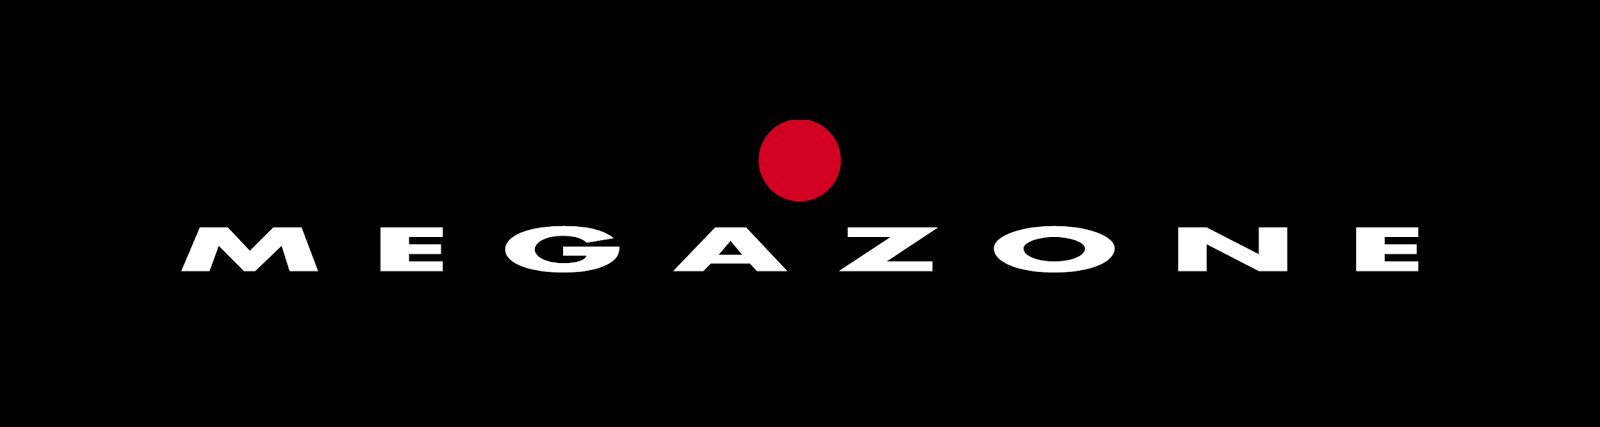 megazone_logo